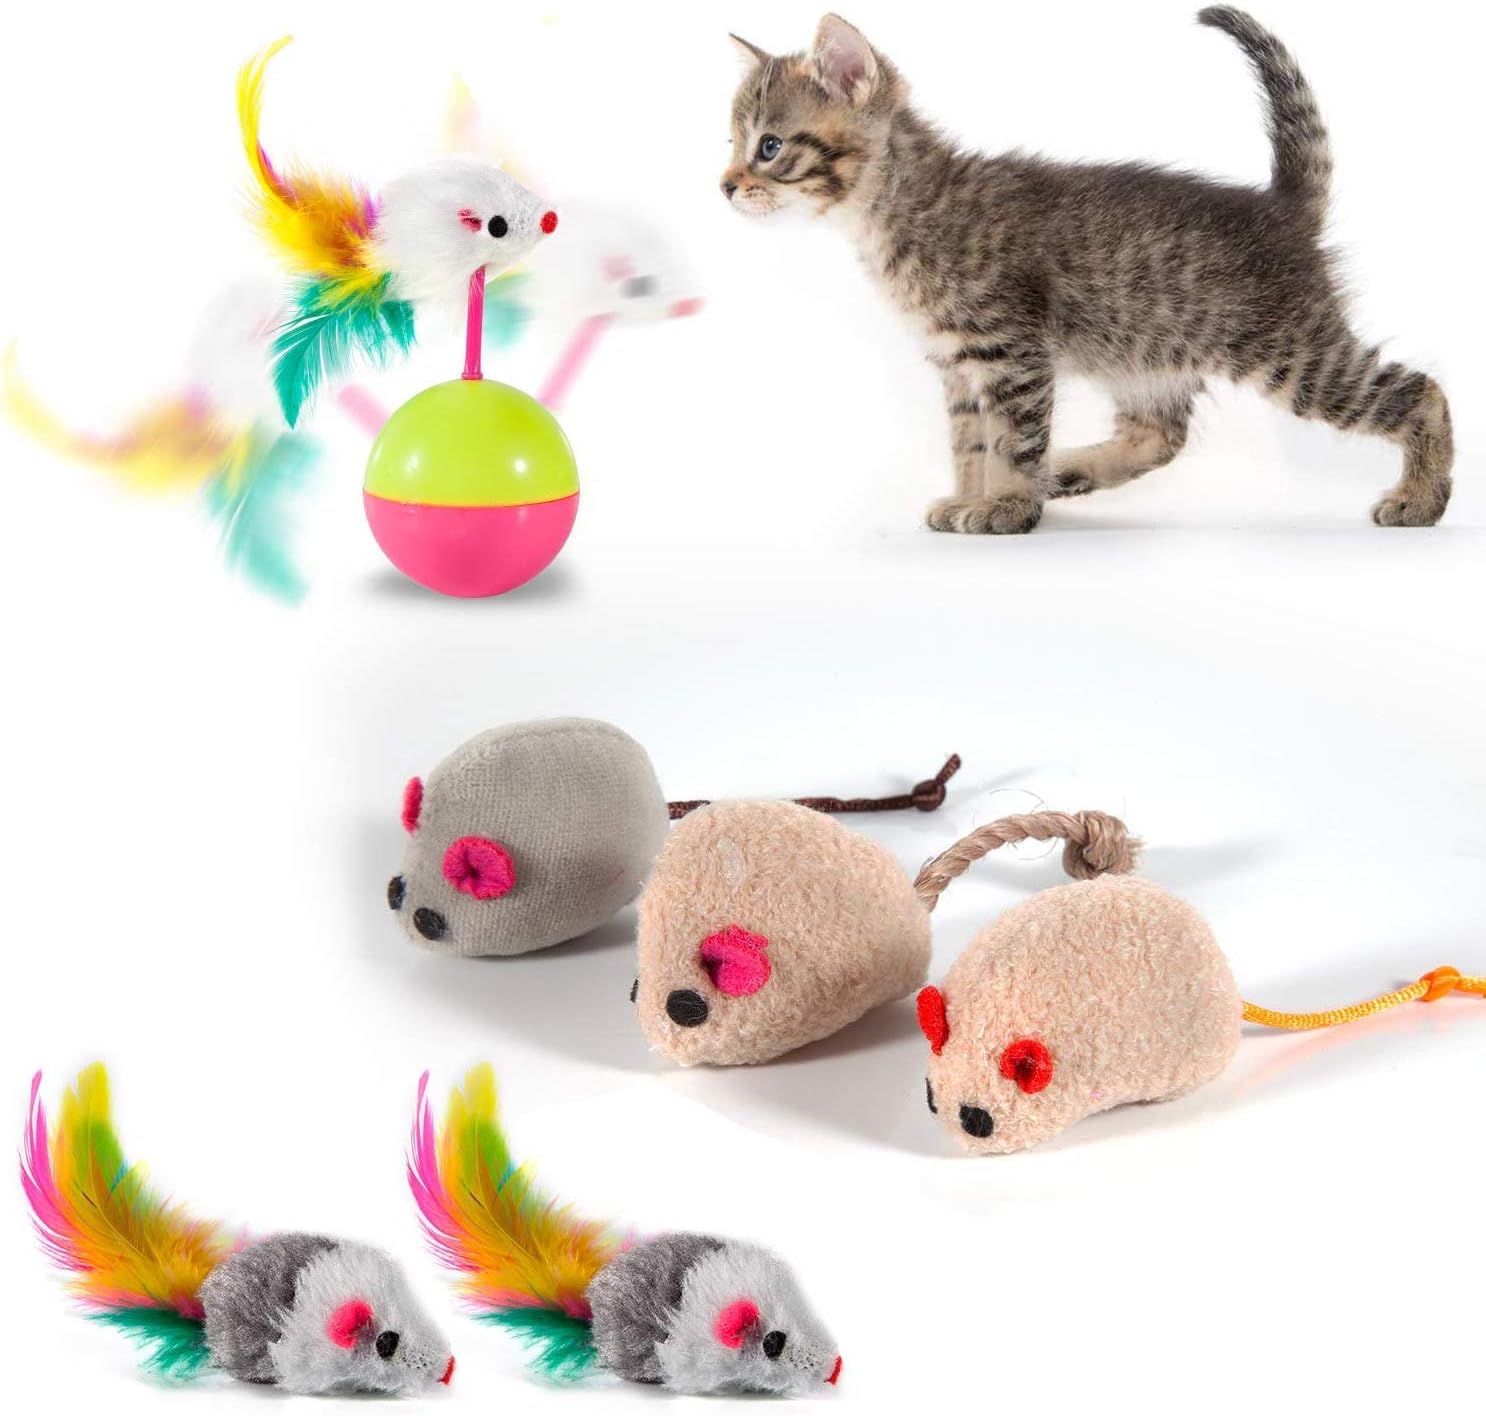 28 juguetes surtidos para gatitos, túnel de gato con hierba gatera, plumas,